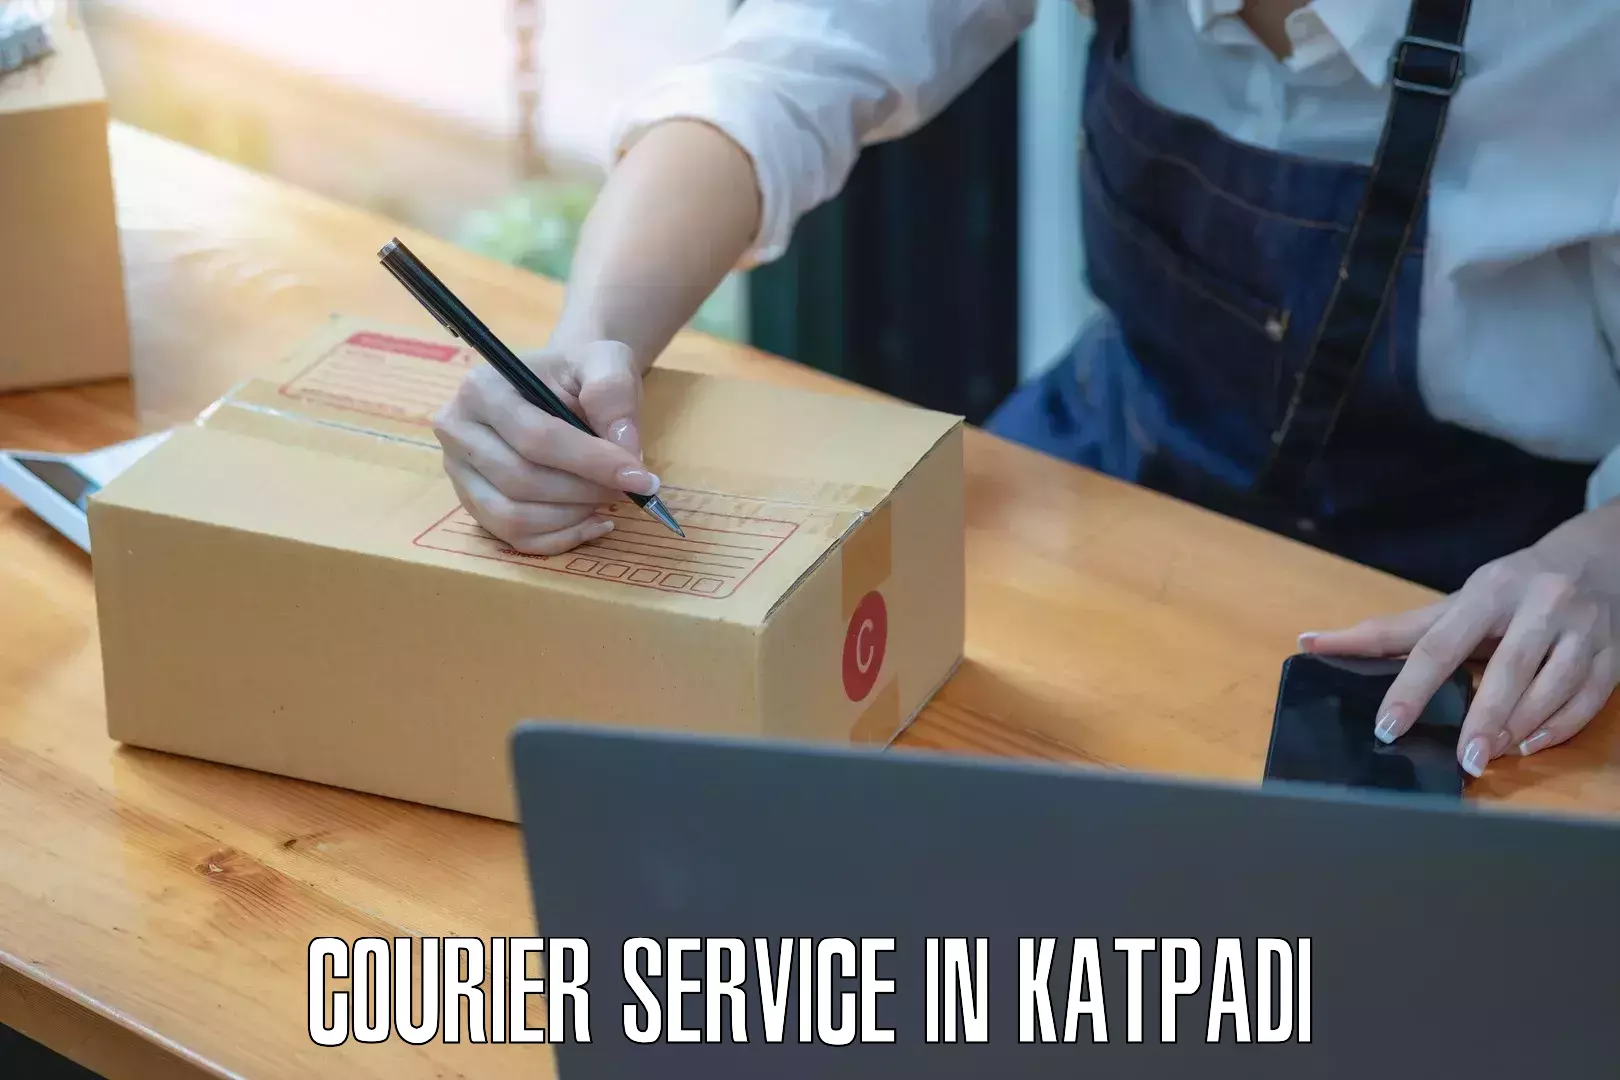 Easy return solutions in Katpadi